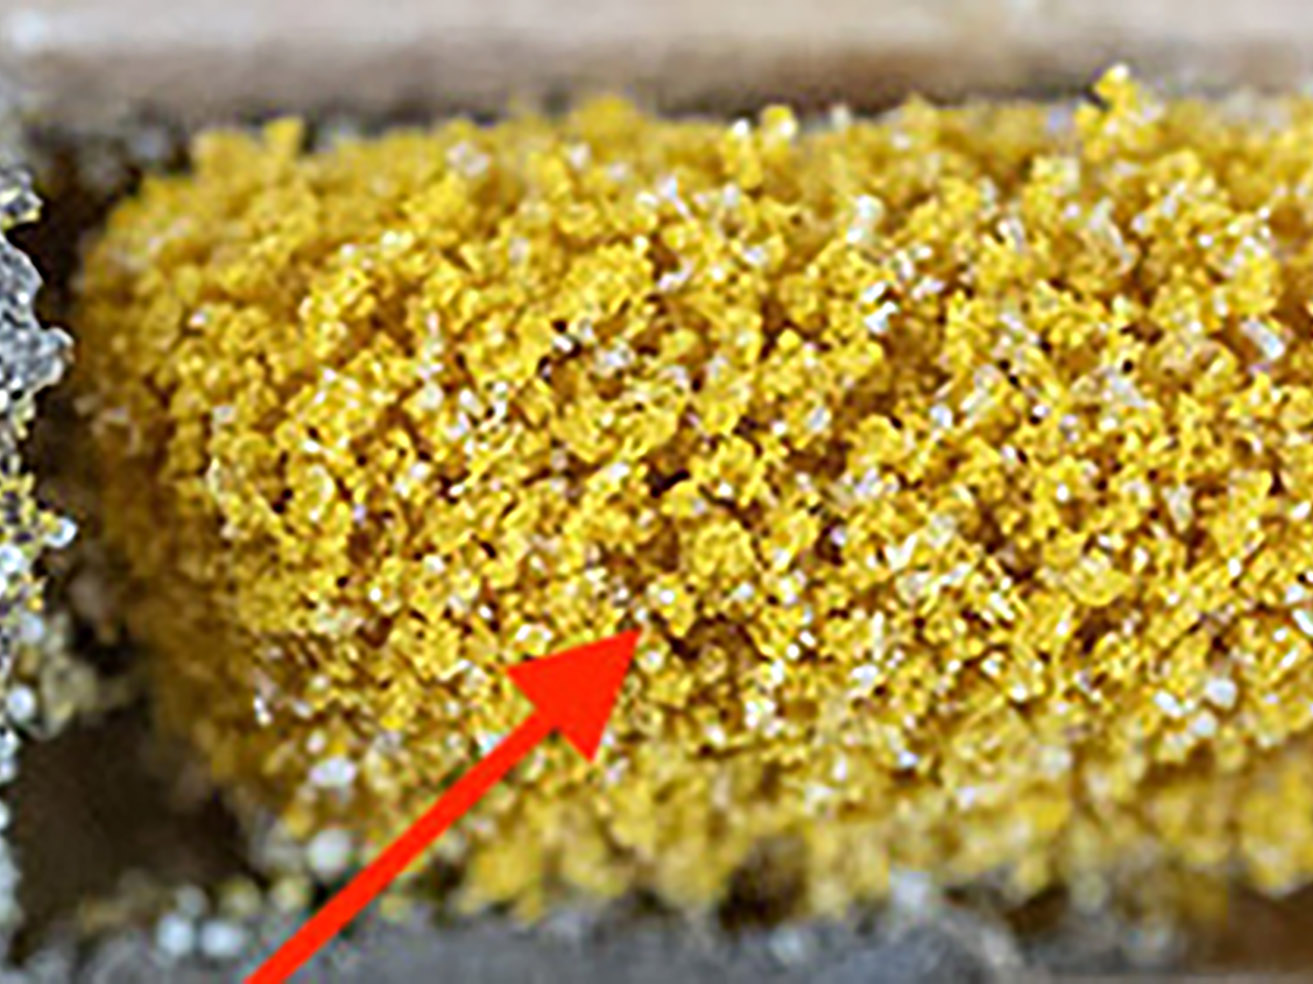 Fig. 7. (left) Hairy-Fingered Mite Infestation (white material) on Pollen Loaf